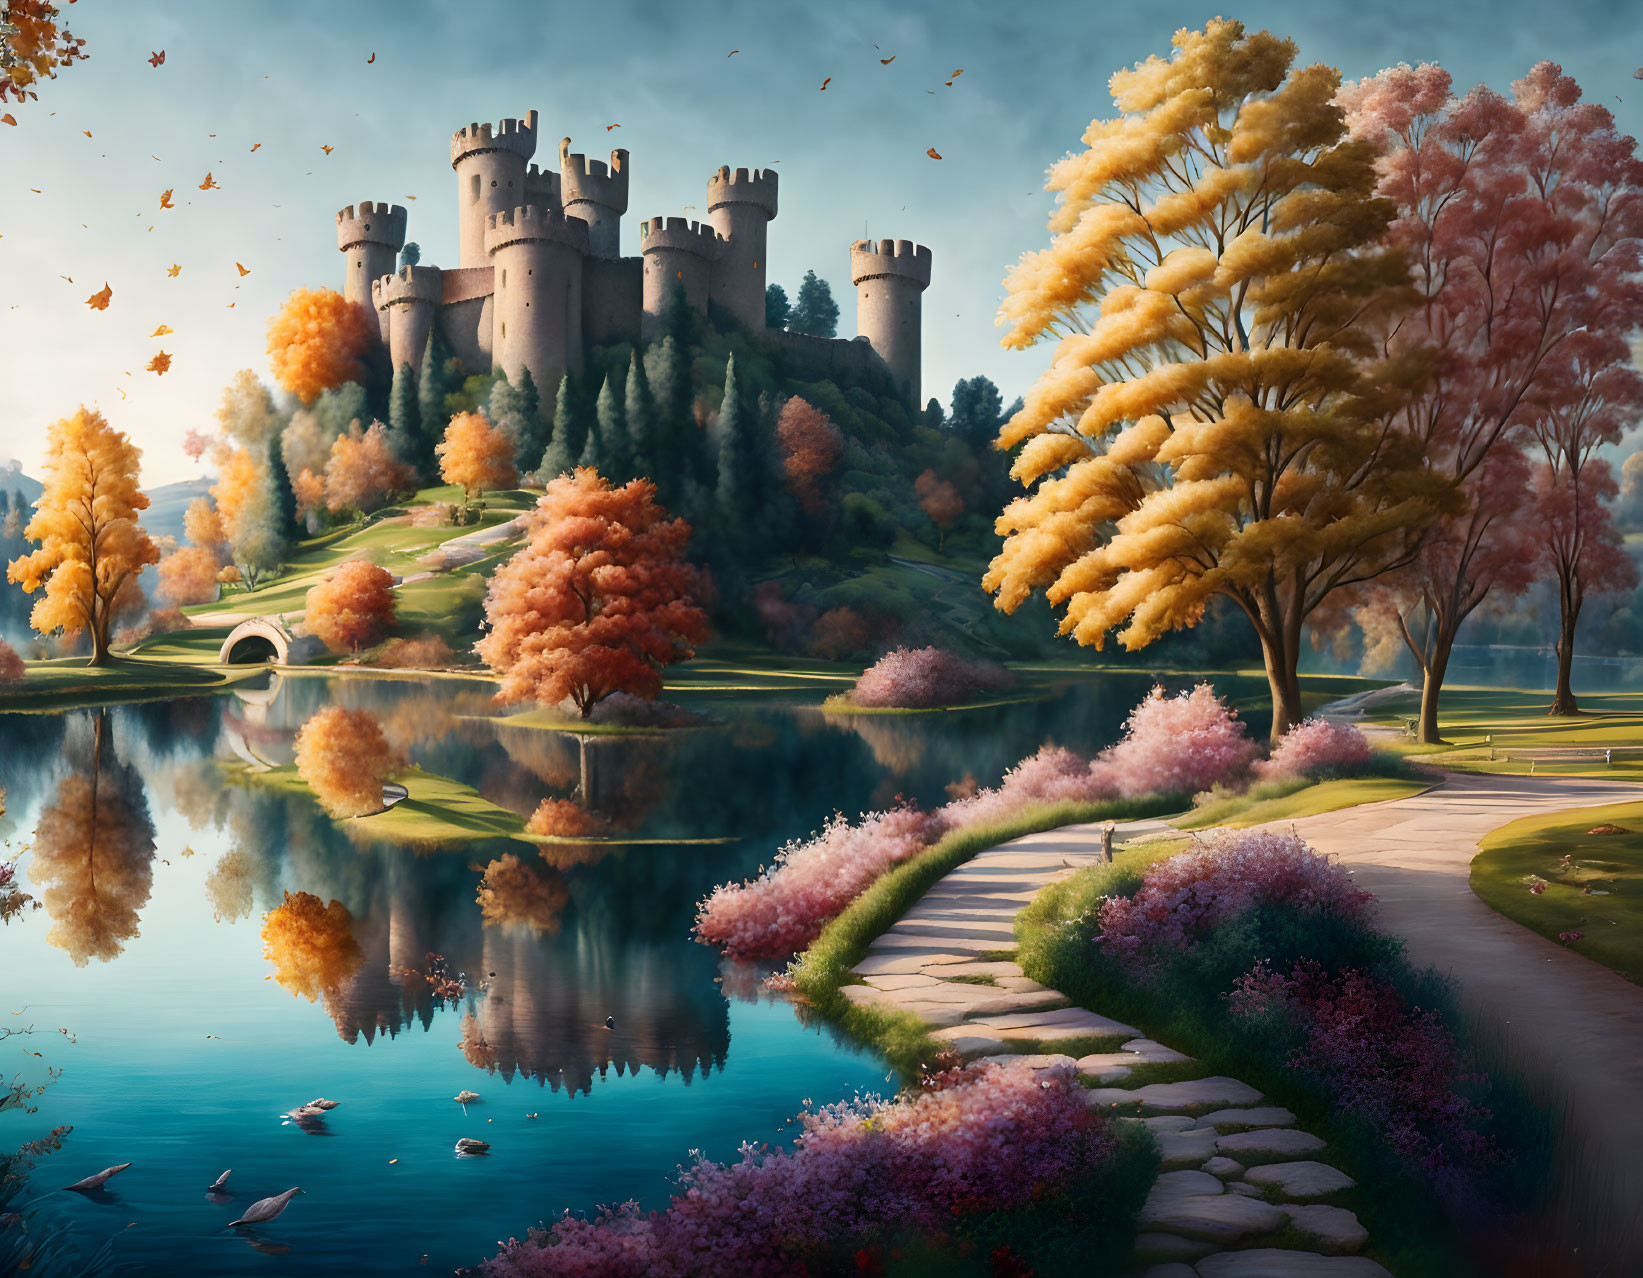 Beautiful medieval Castle near a lake